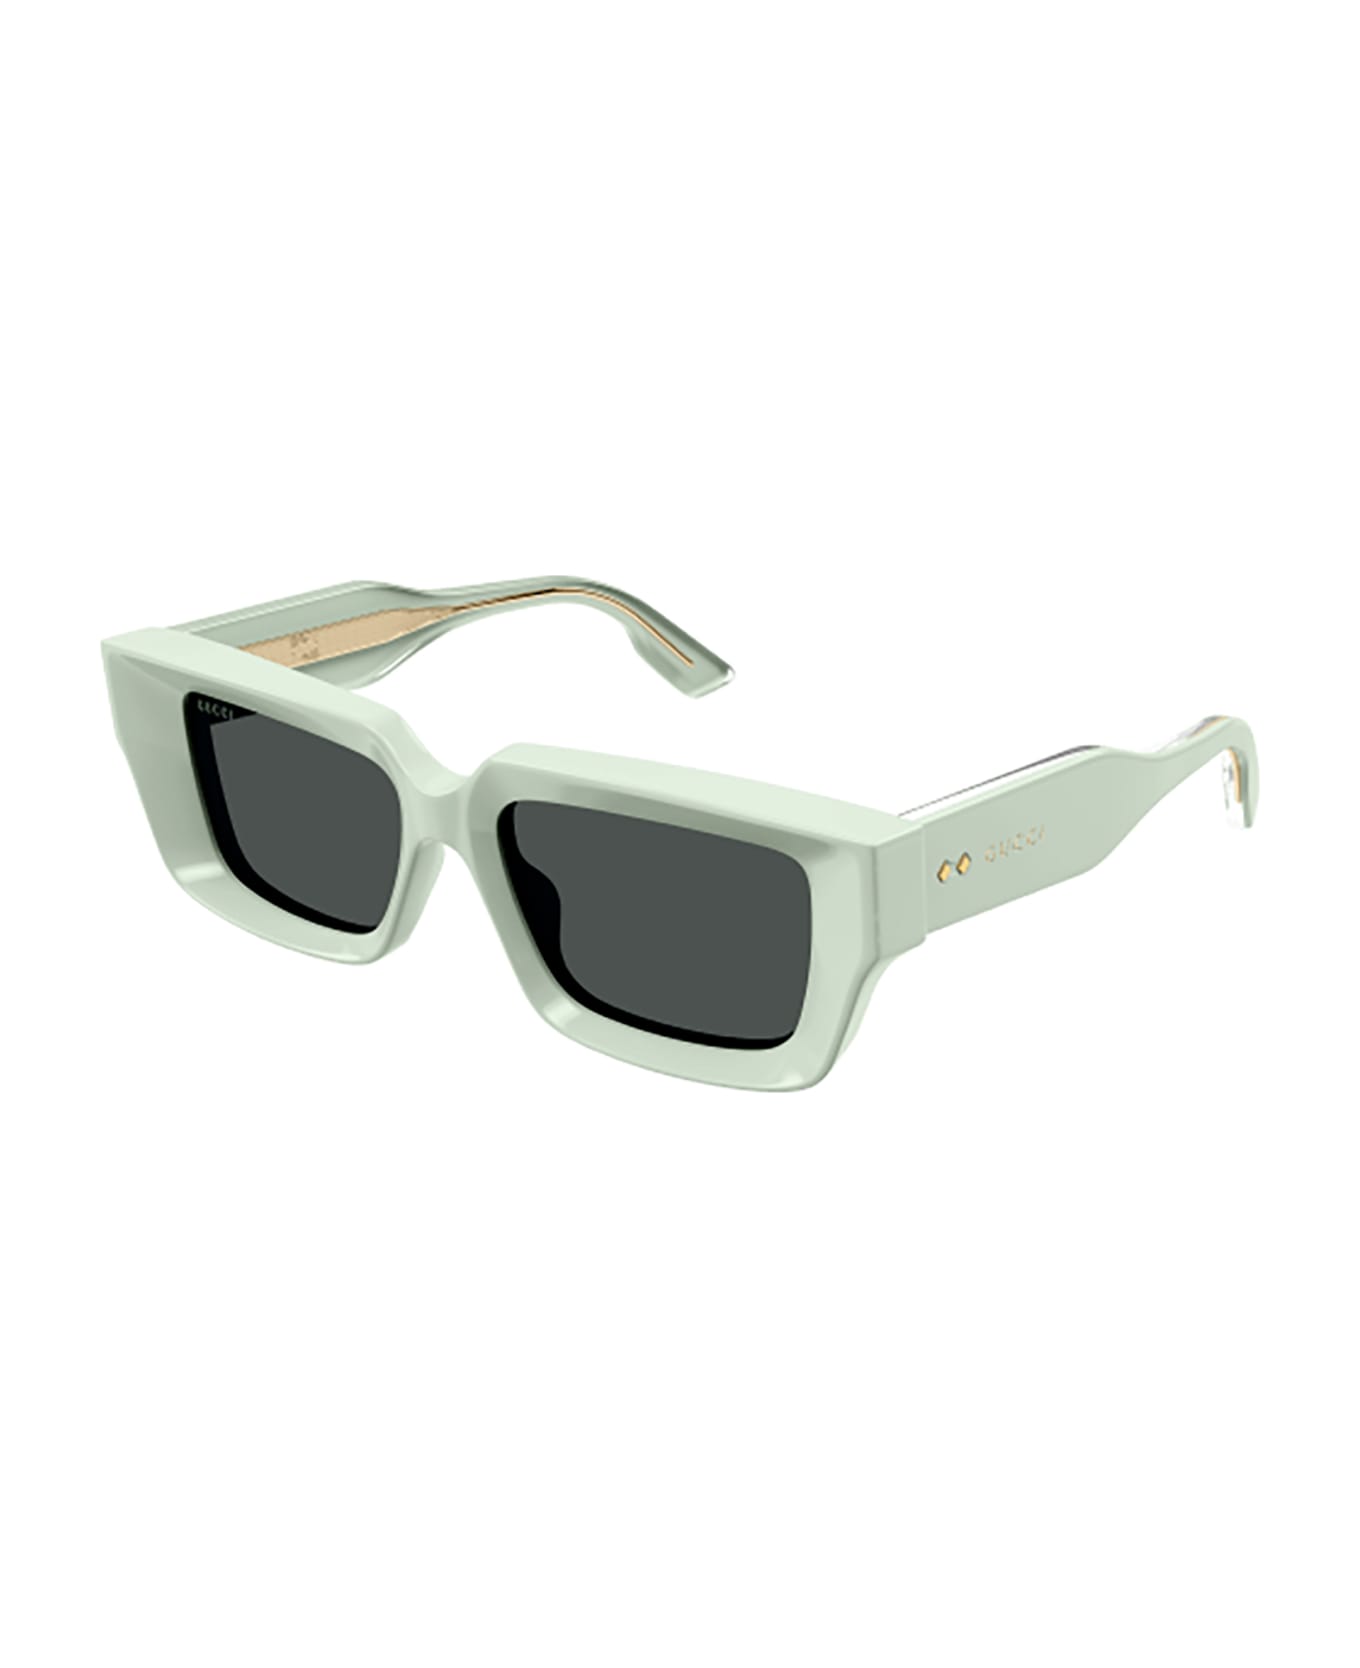 Gucci Eyewear GG1529S Sunglasses - Green Green Grey